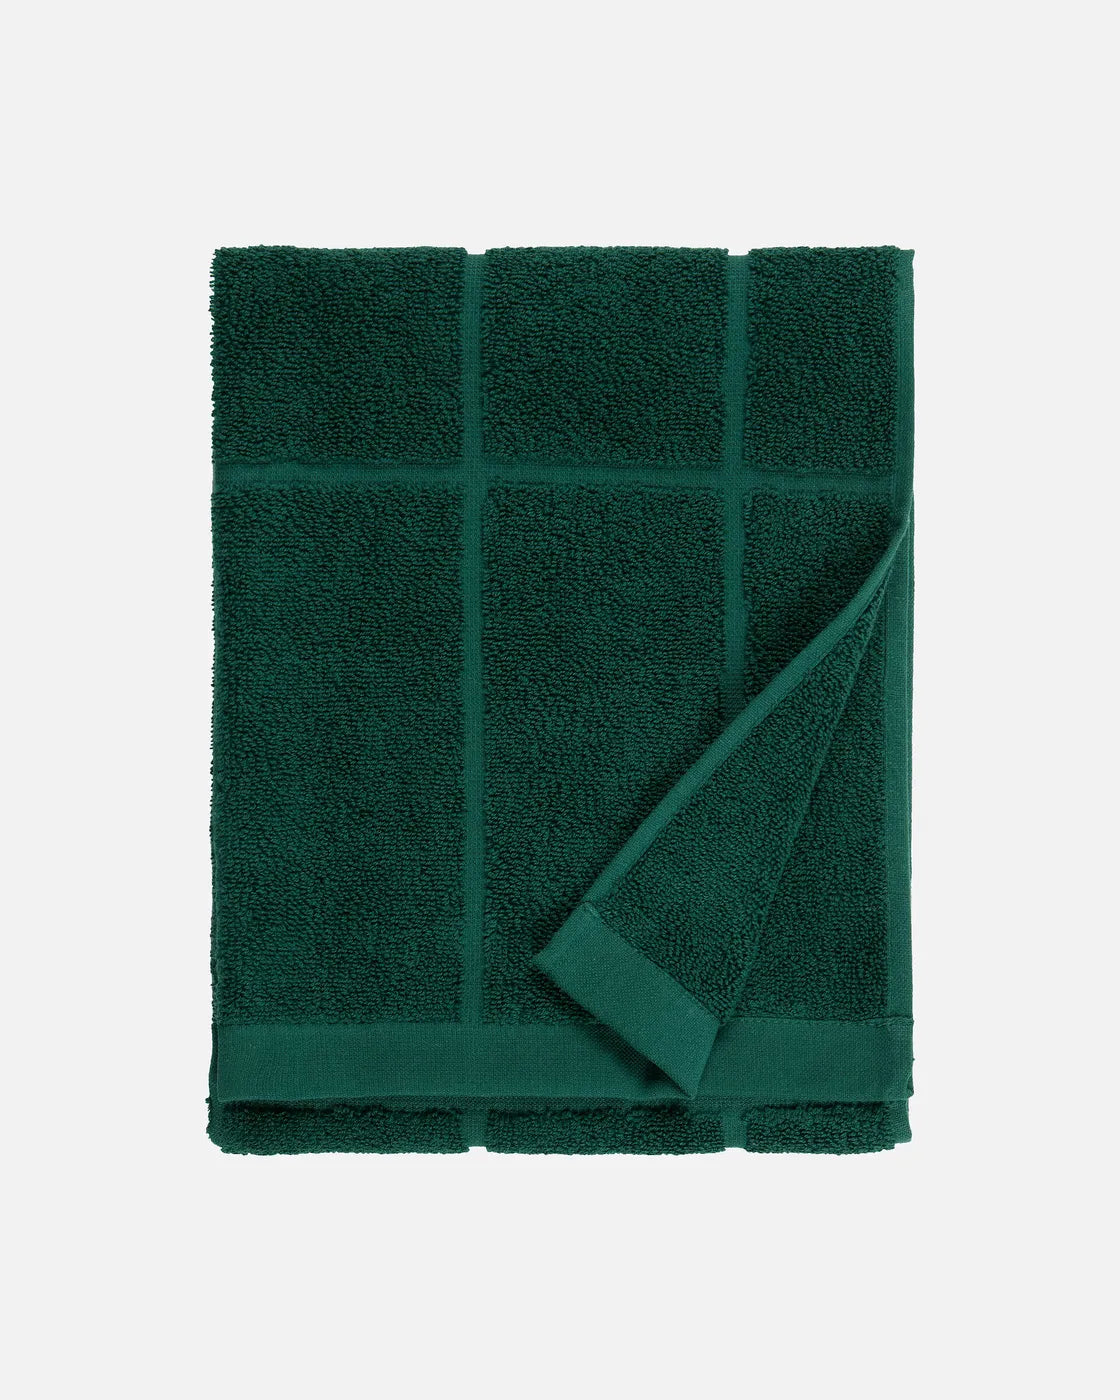 Tiiliskivi Hand Towel 50 X 70 Cm dark.green